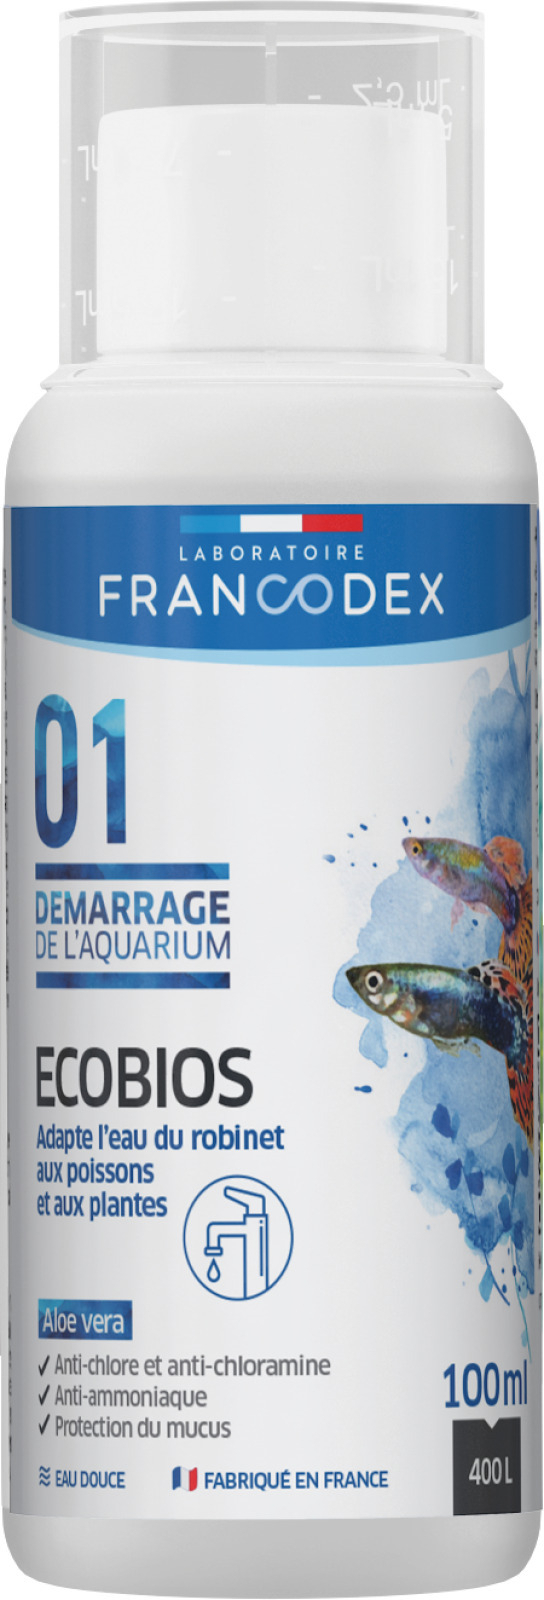 Ecobios condicionador de água FRANCODEX